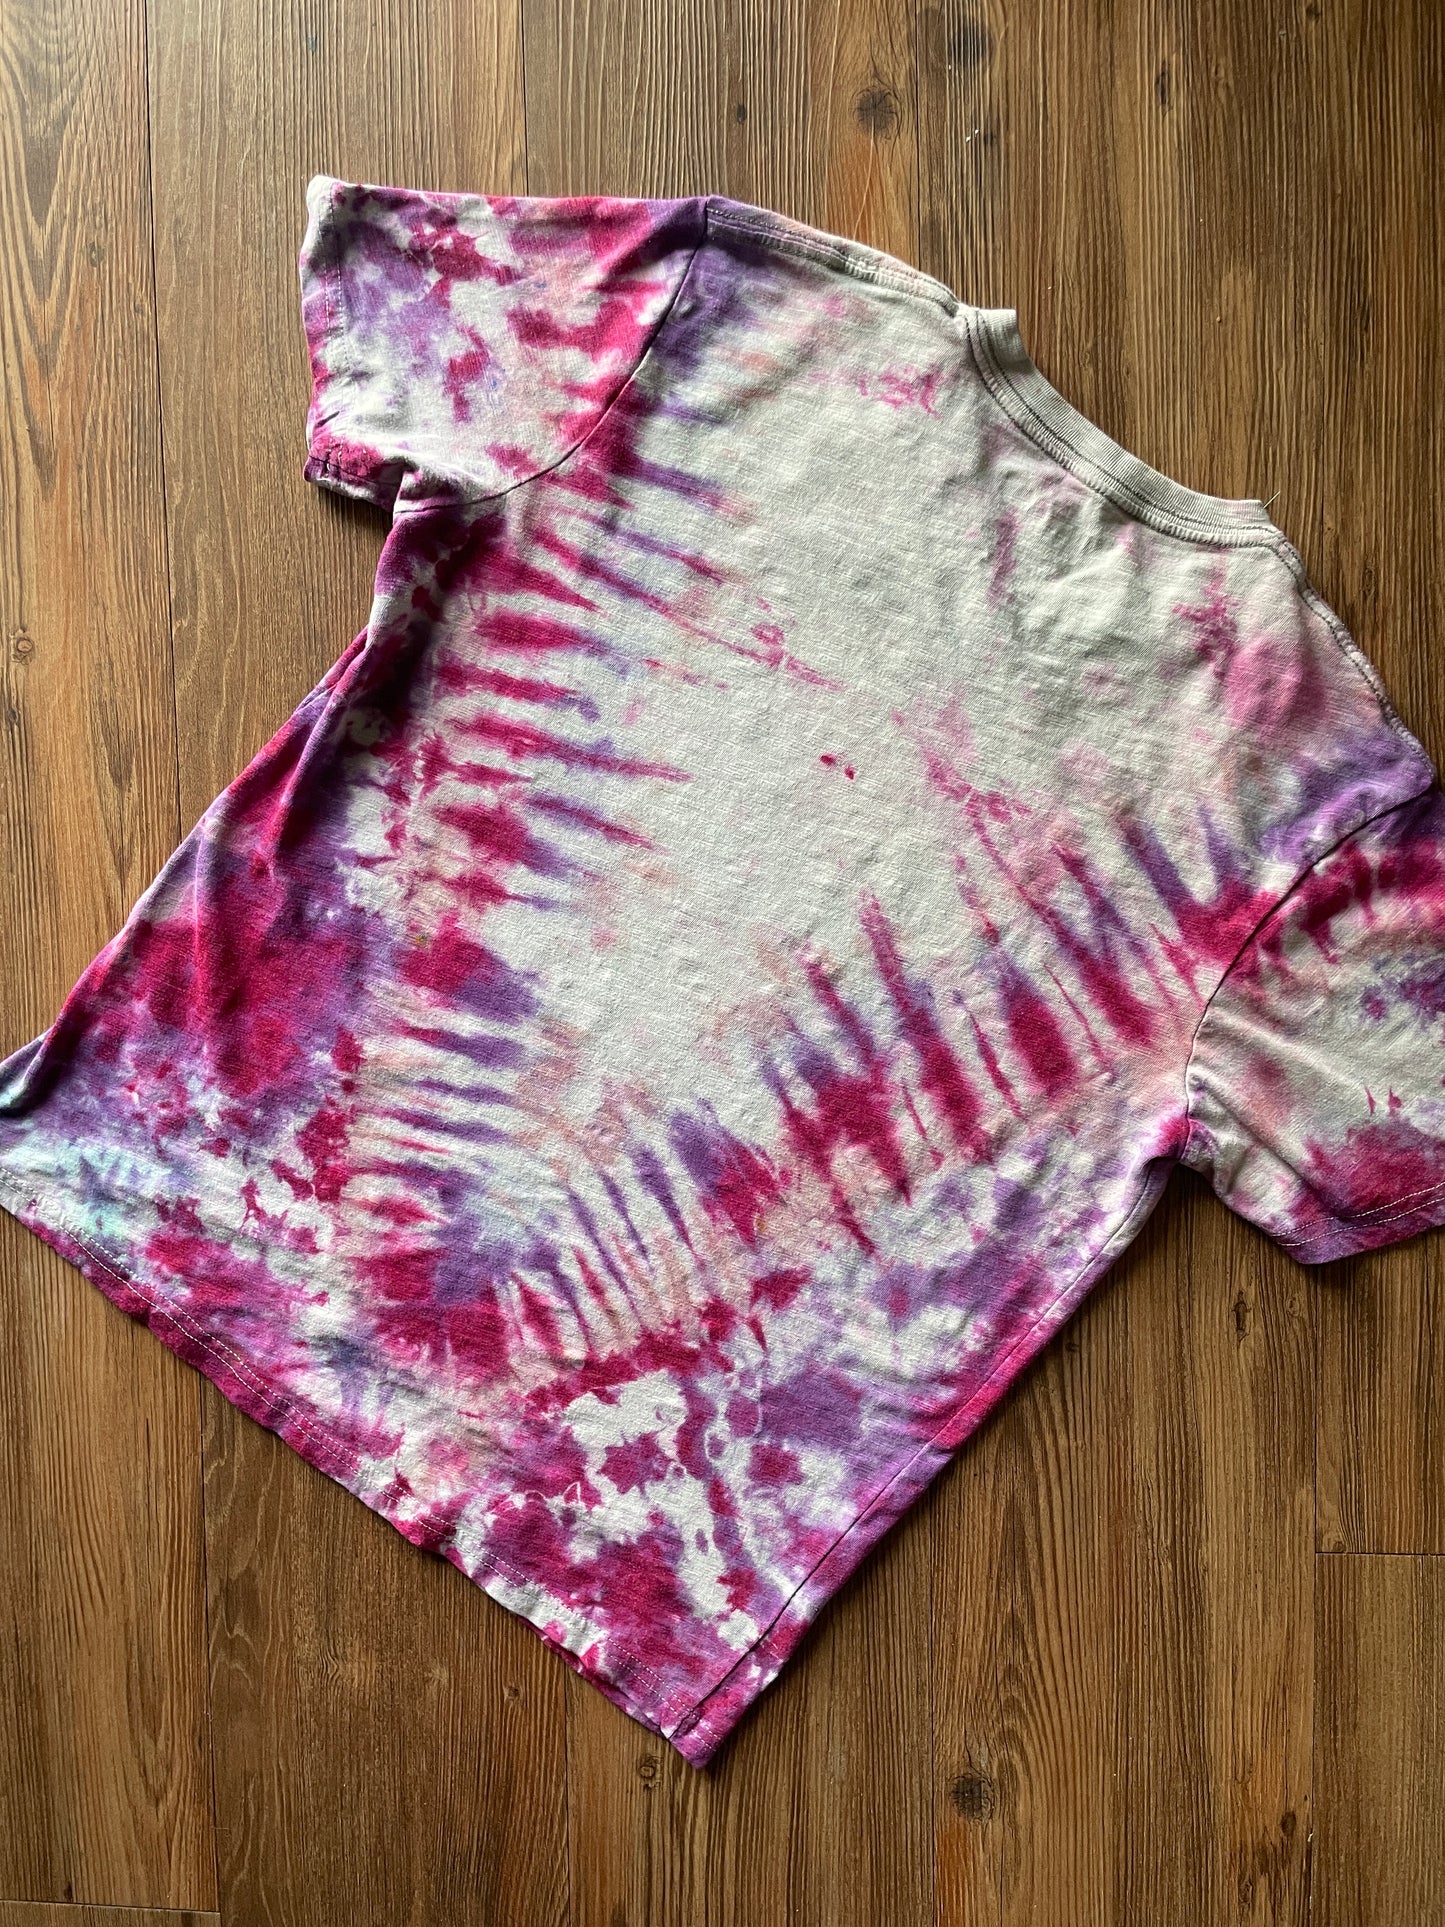 Medium Women’s Jimi Hendrix Tie Dye T-Shirt | Gray, Pink, and Purple Short Sleeve V-Neck